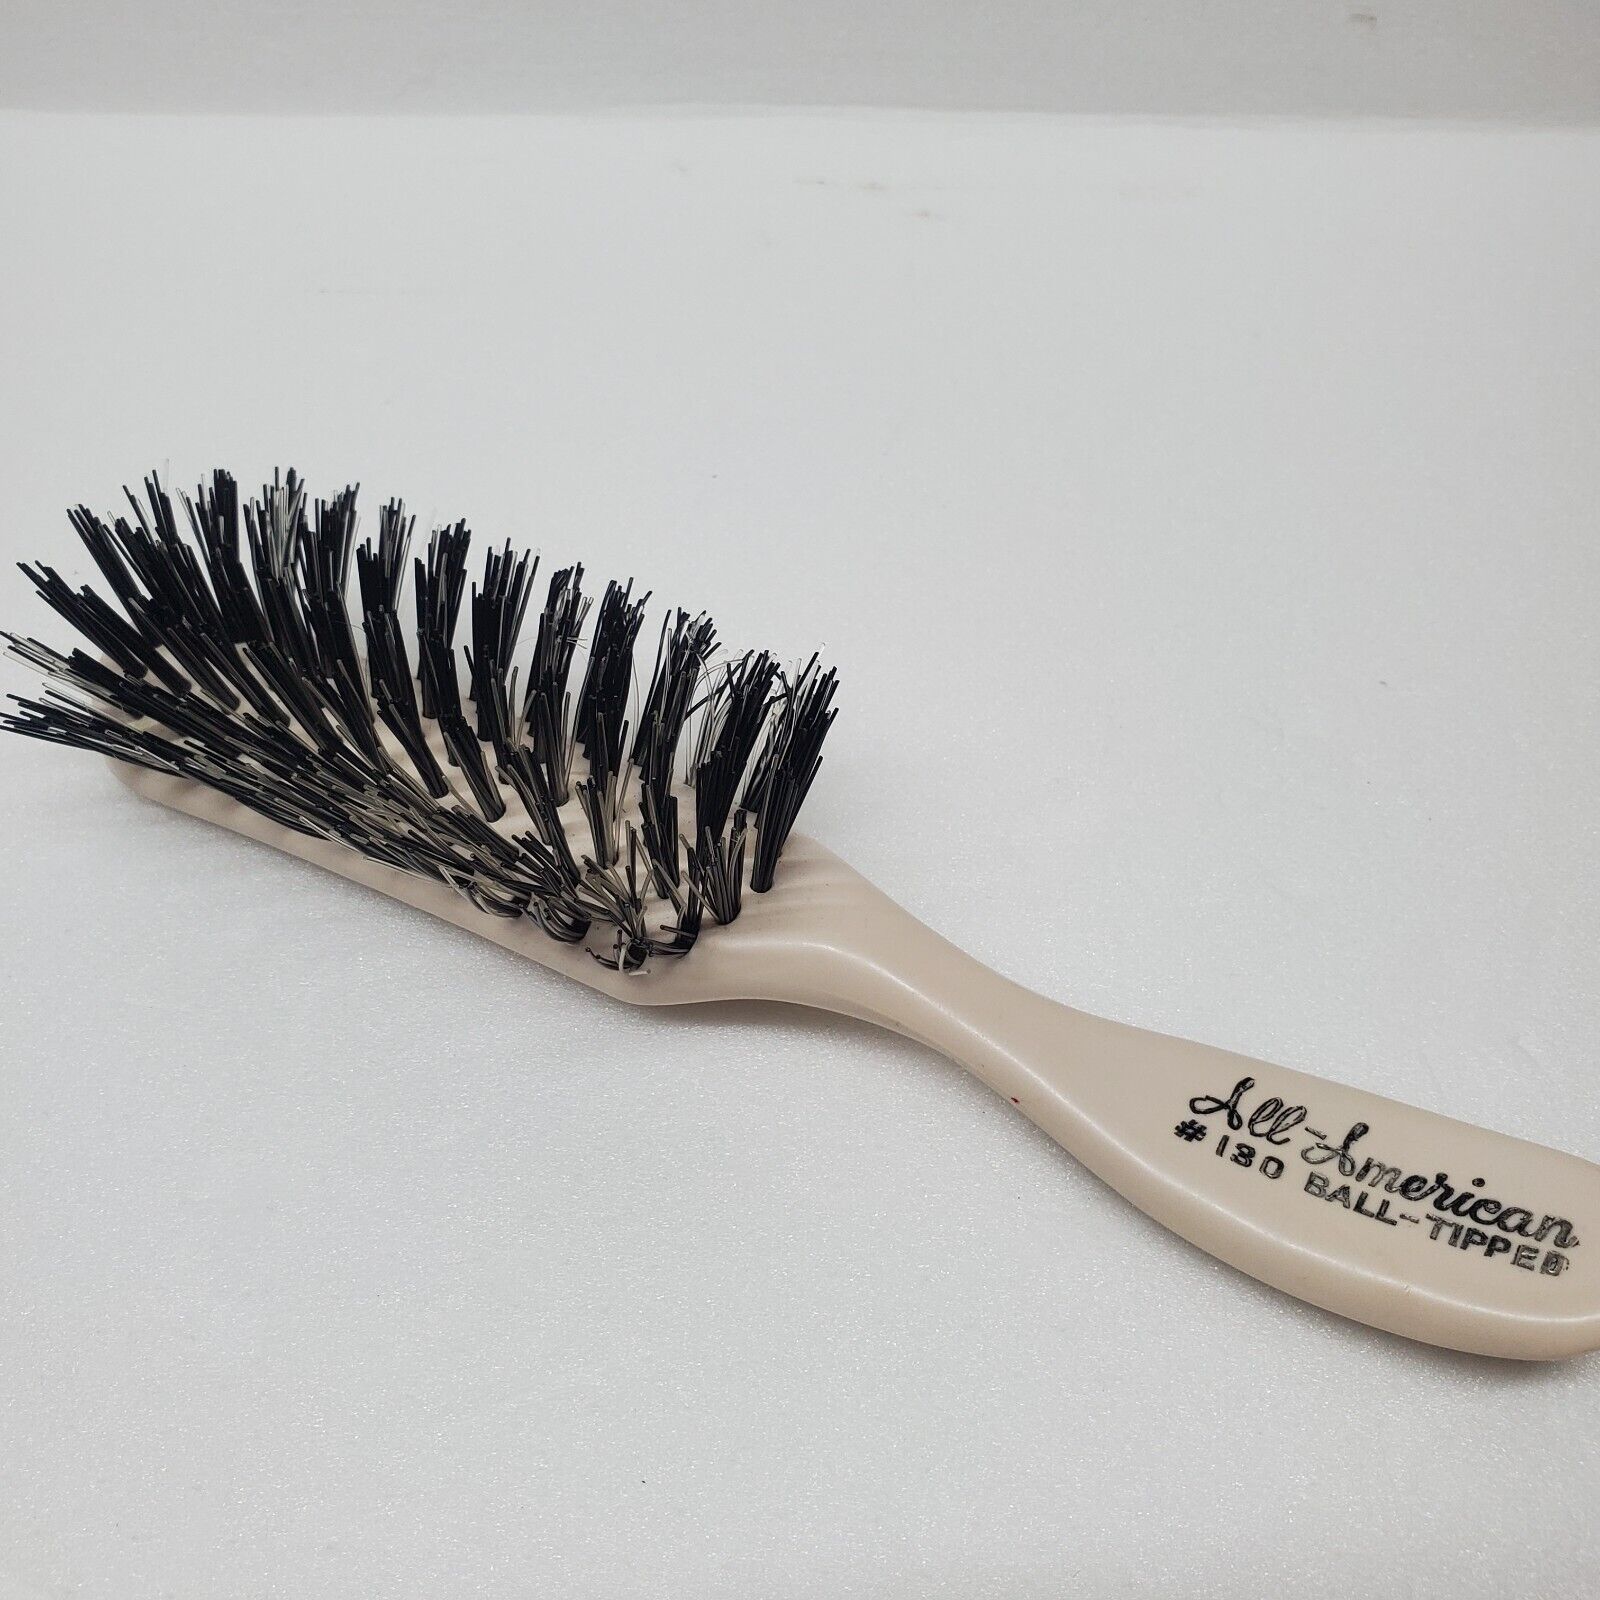 Vintage All-American Ball-Tipped Hairbrush Bristle Brush #130 Tan